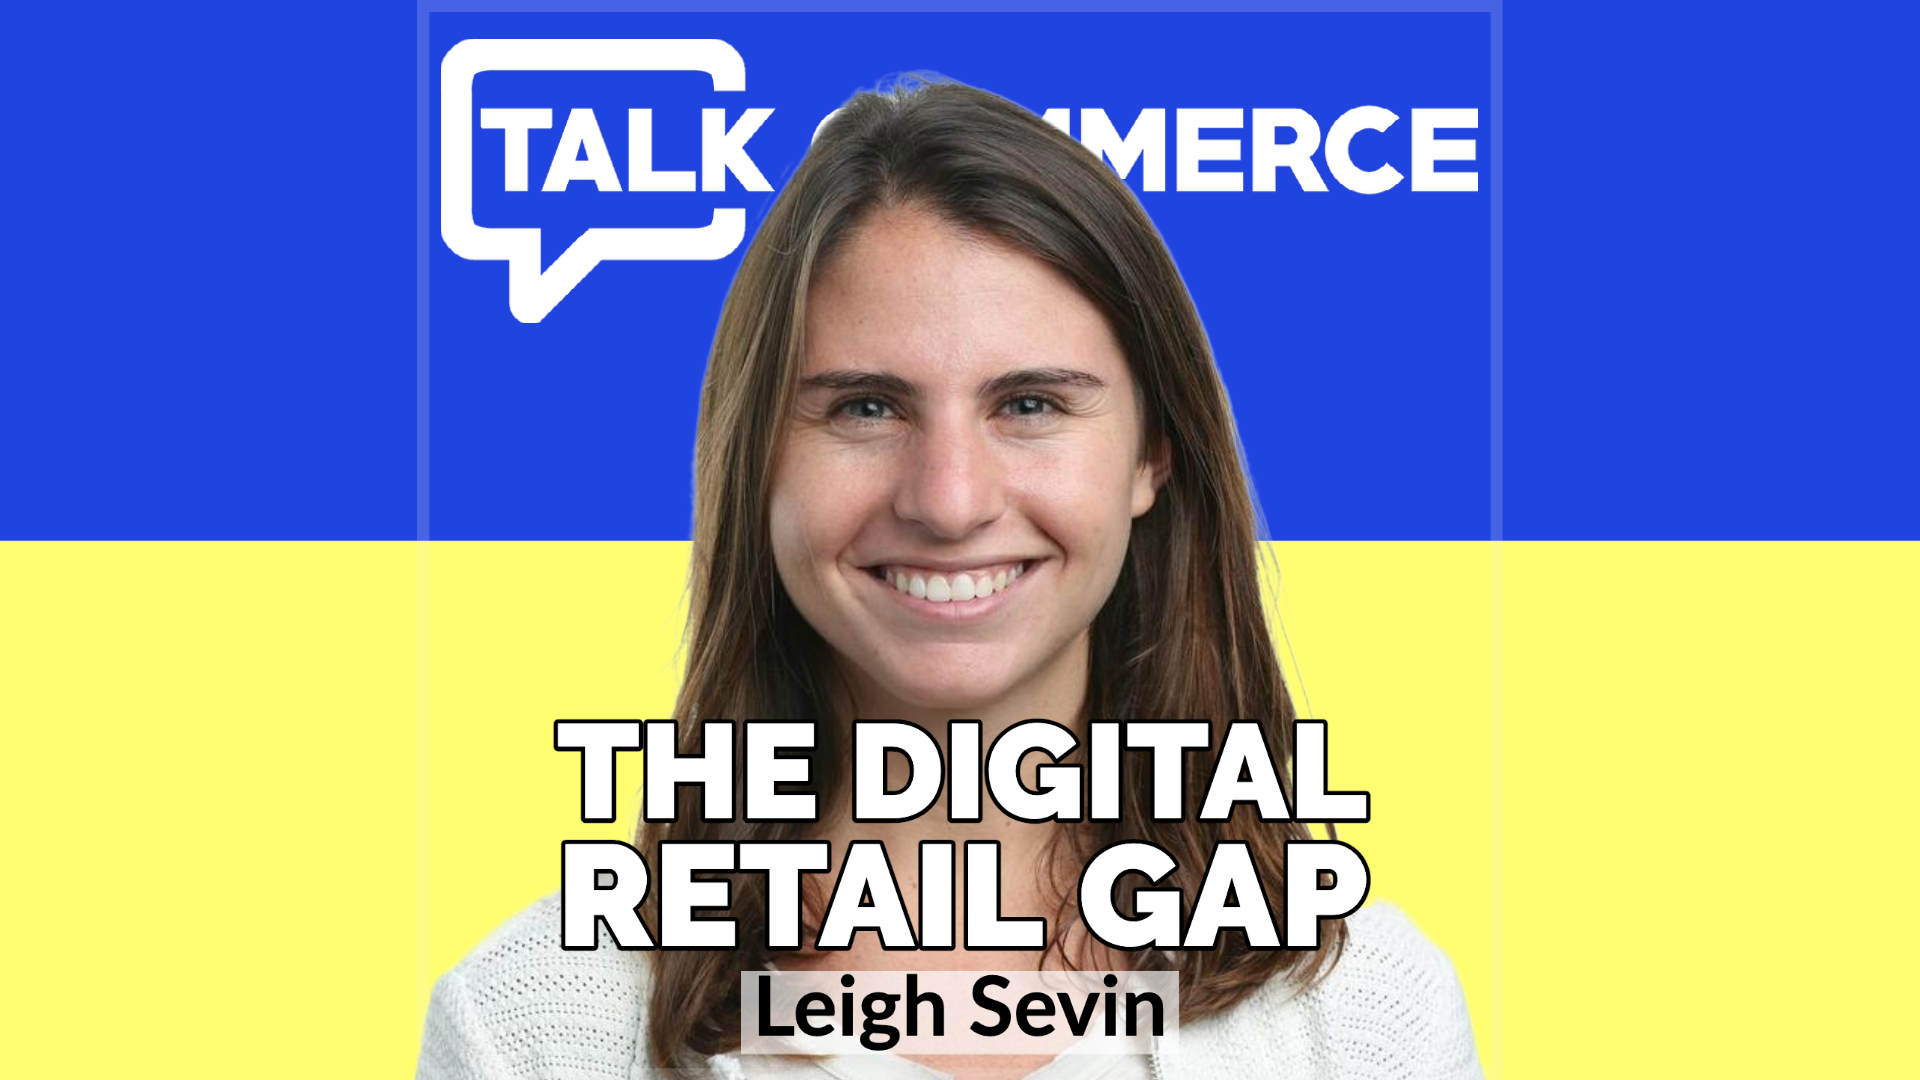 Talk-Commerce Leigh Sevin